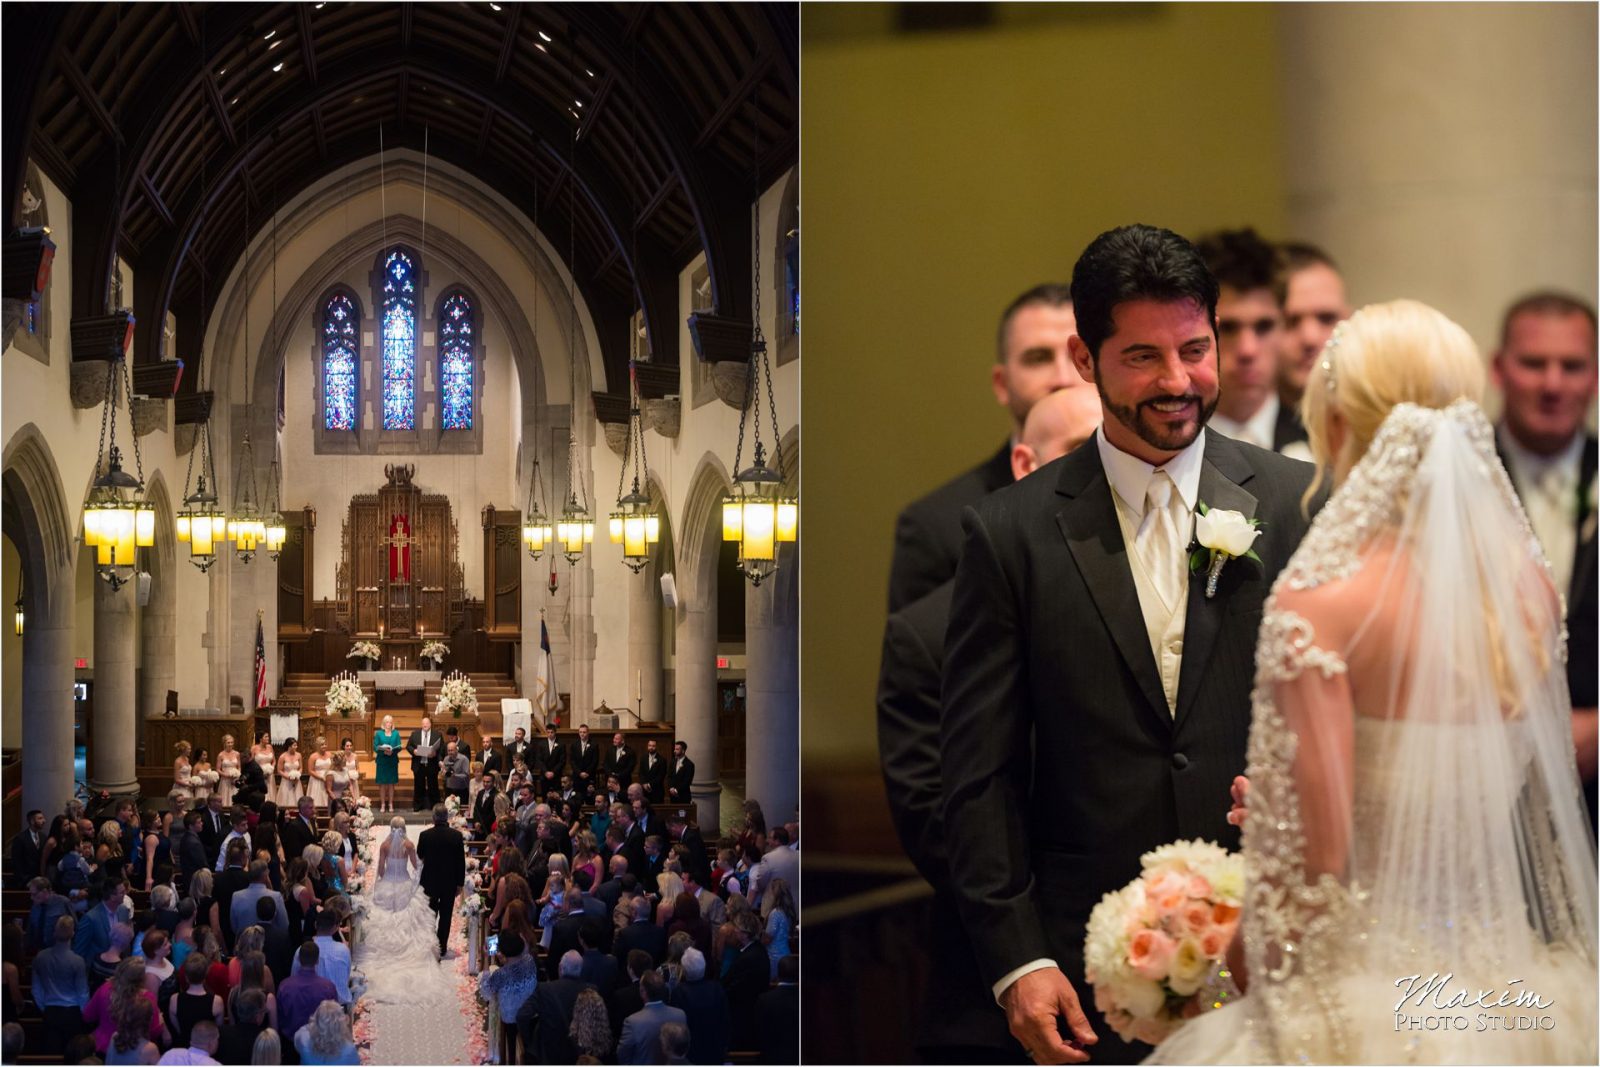 Cincinnati Wedding Photographers Hyde Park United Methodist Church Wedding ceremony